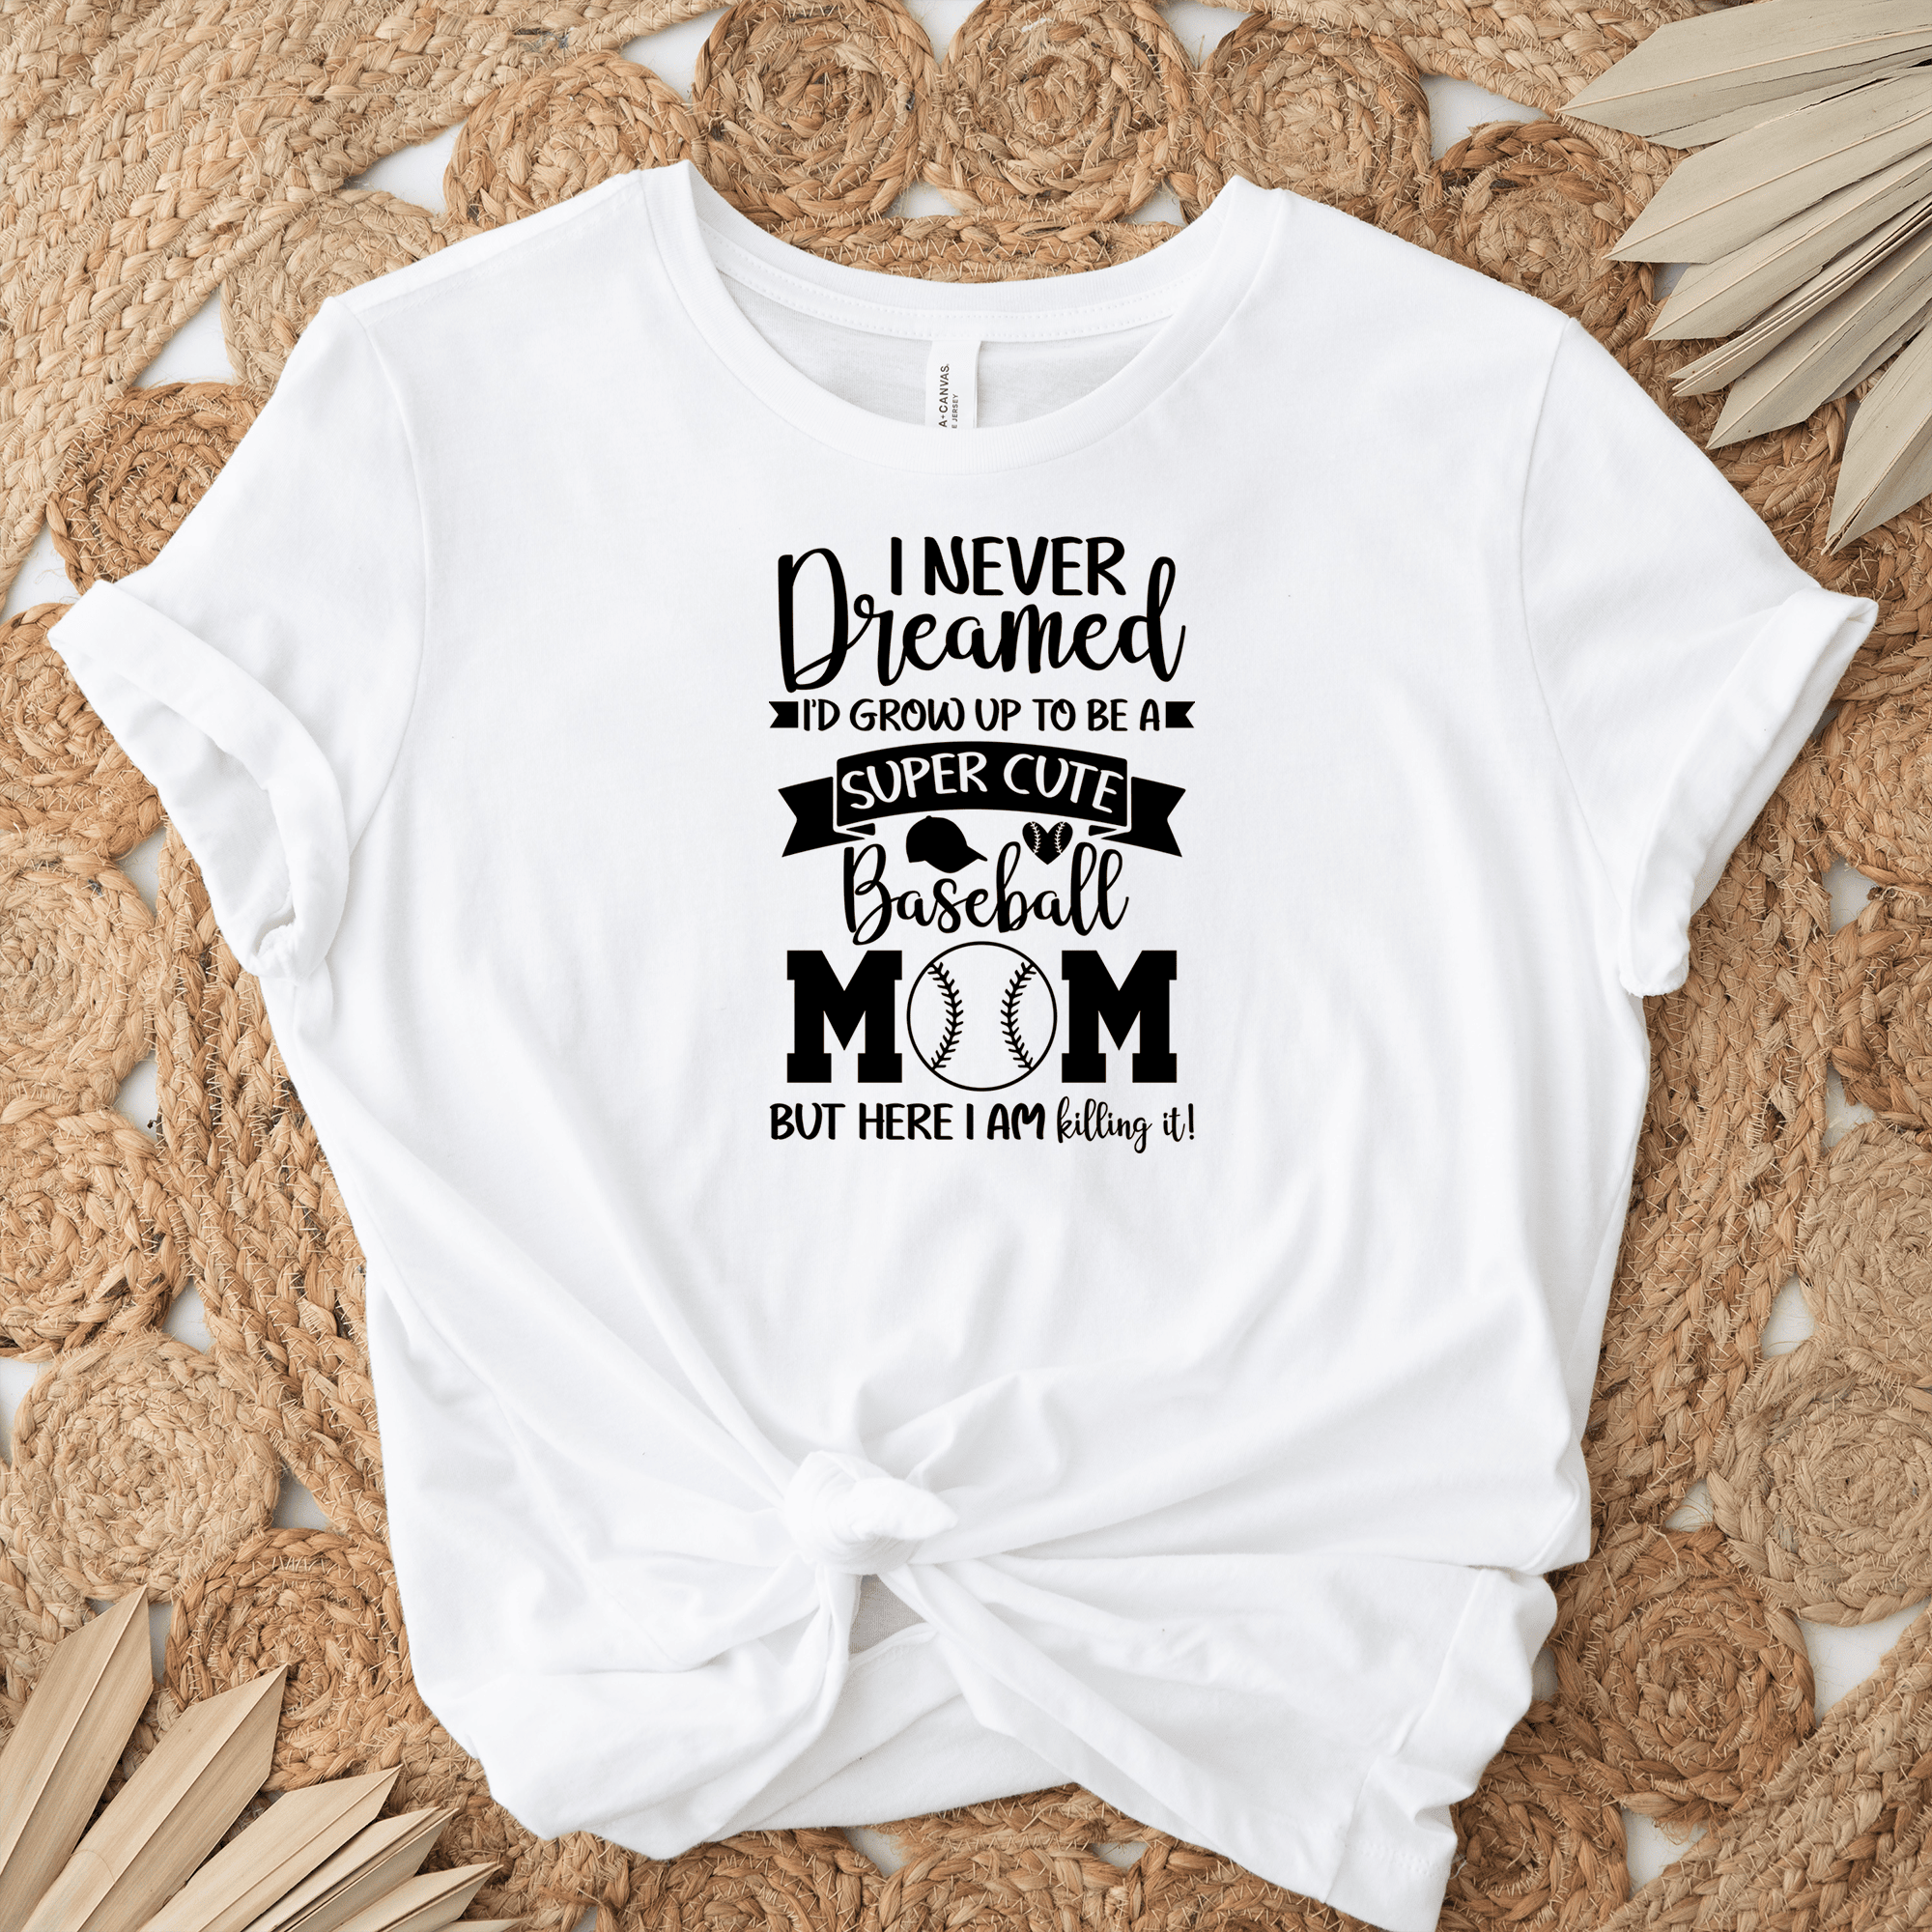 Womens White T Shirt with Super-Cute-Baseball-Mom design